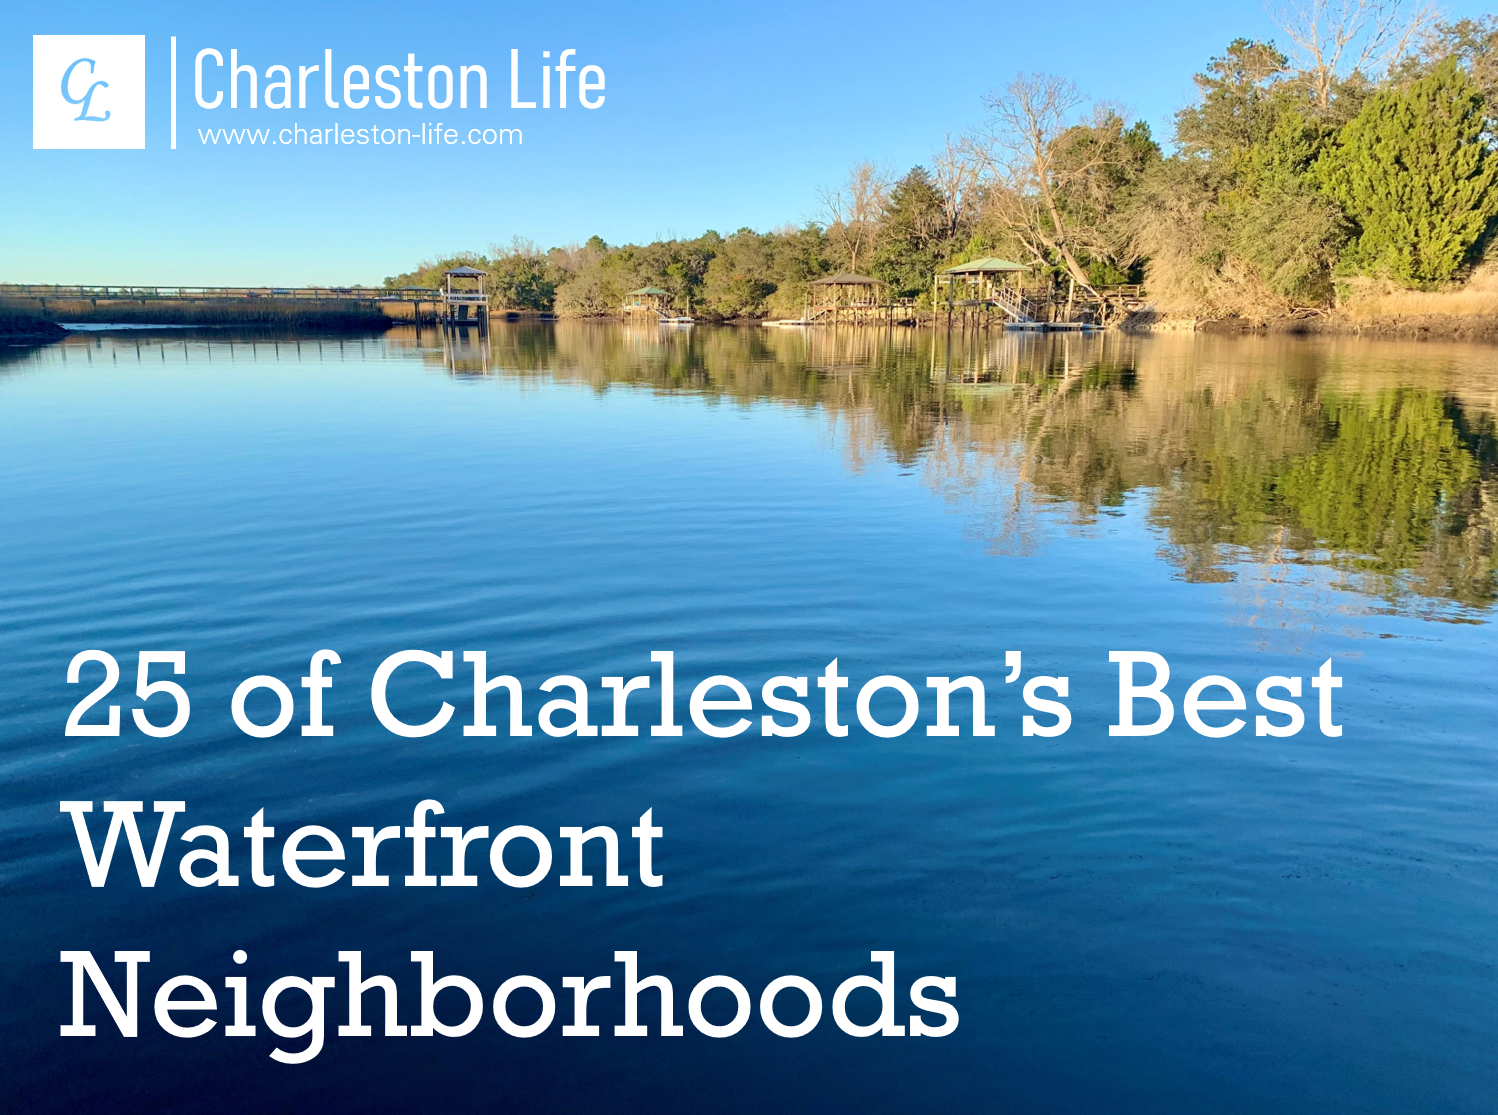 Neighborhood with Waterfront Homes in Charleston